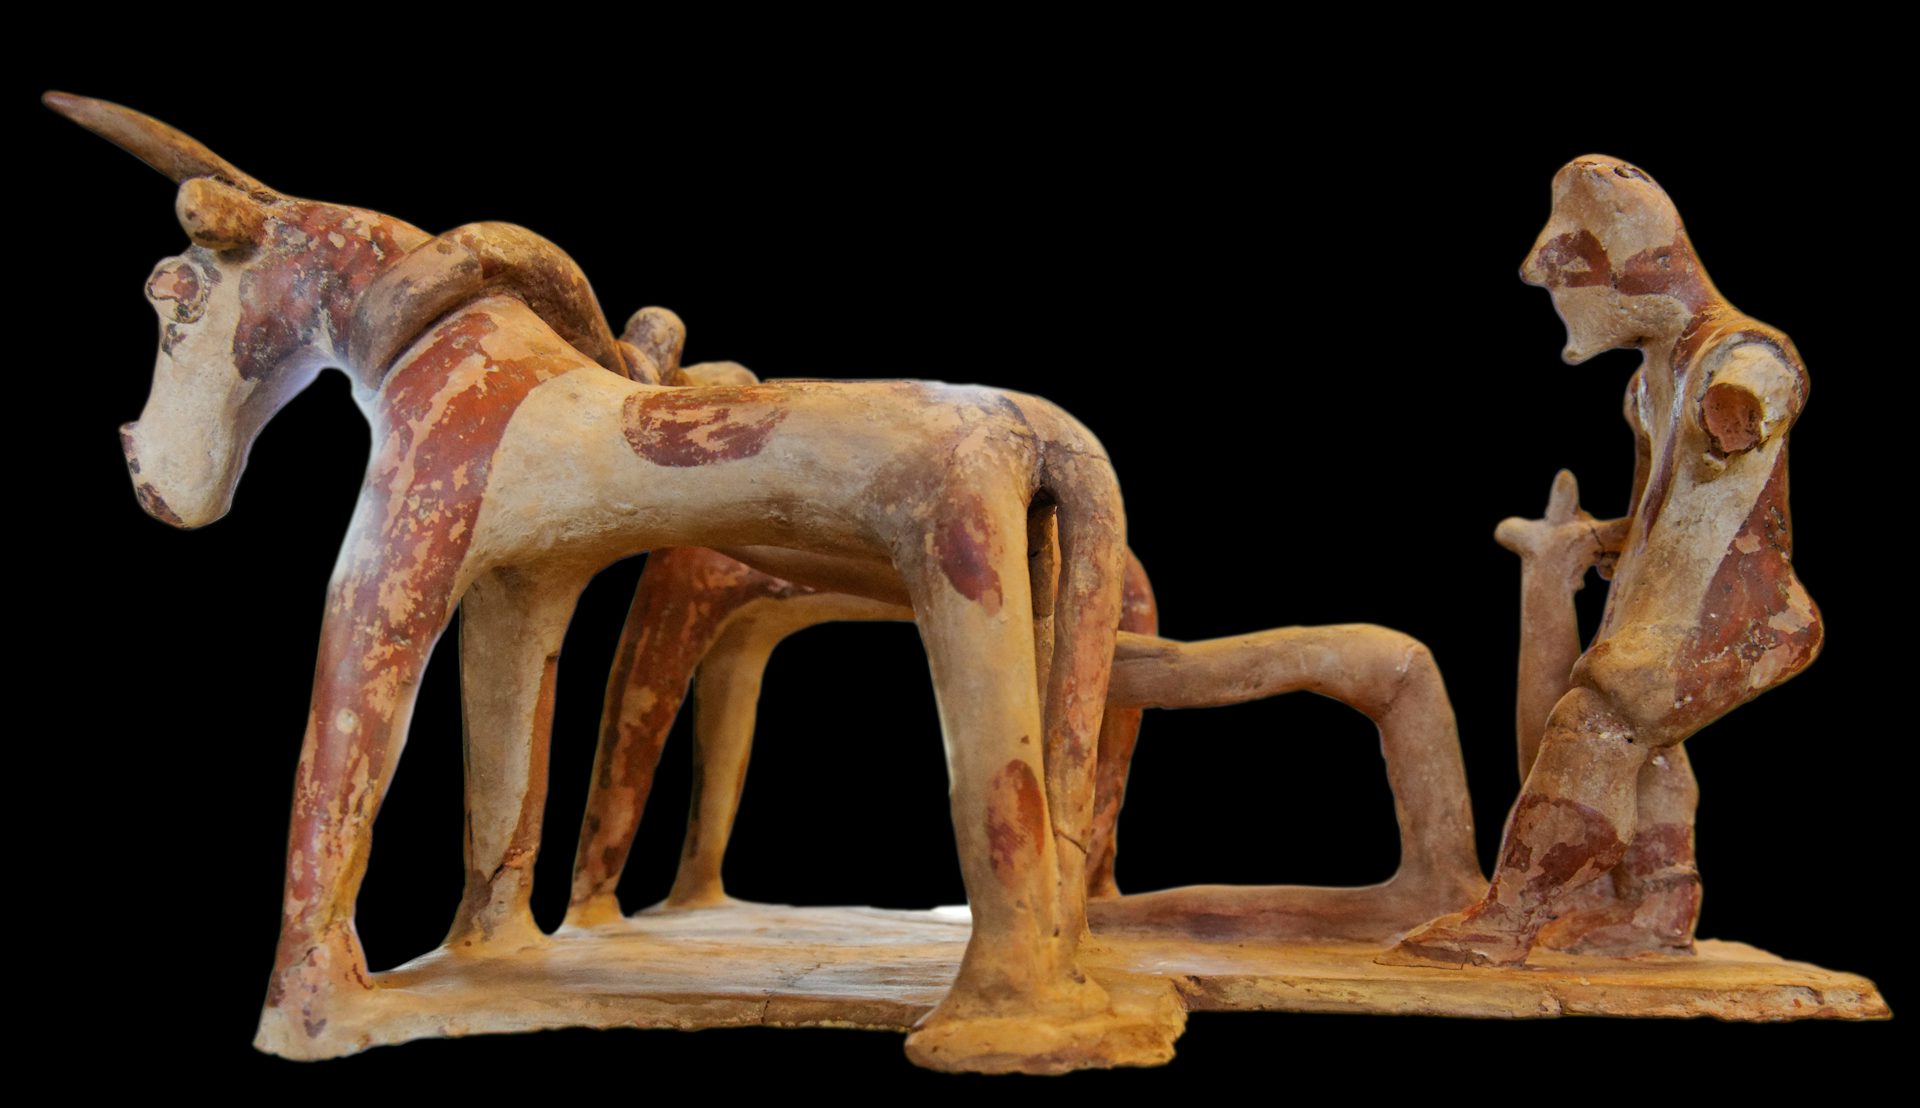 Terracotta figurine of a plowman